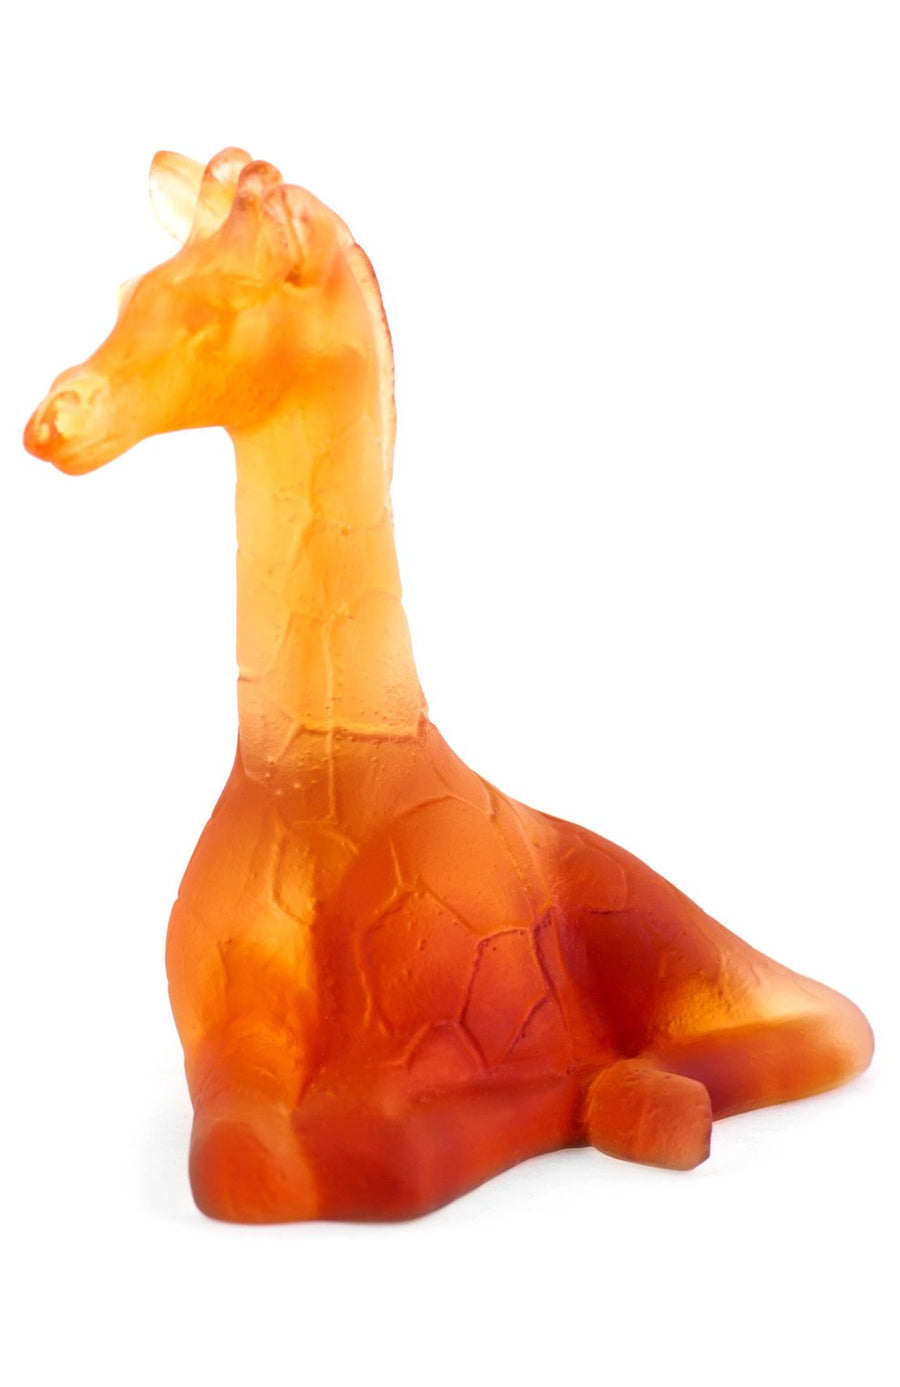 DAUM | Mini Giraffe Amber 6.5cm